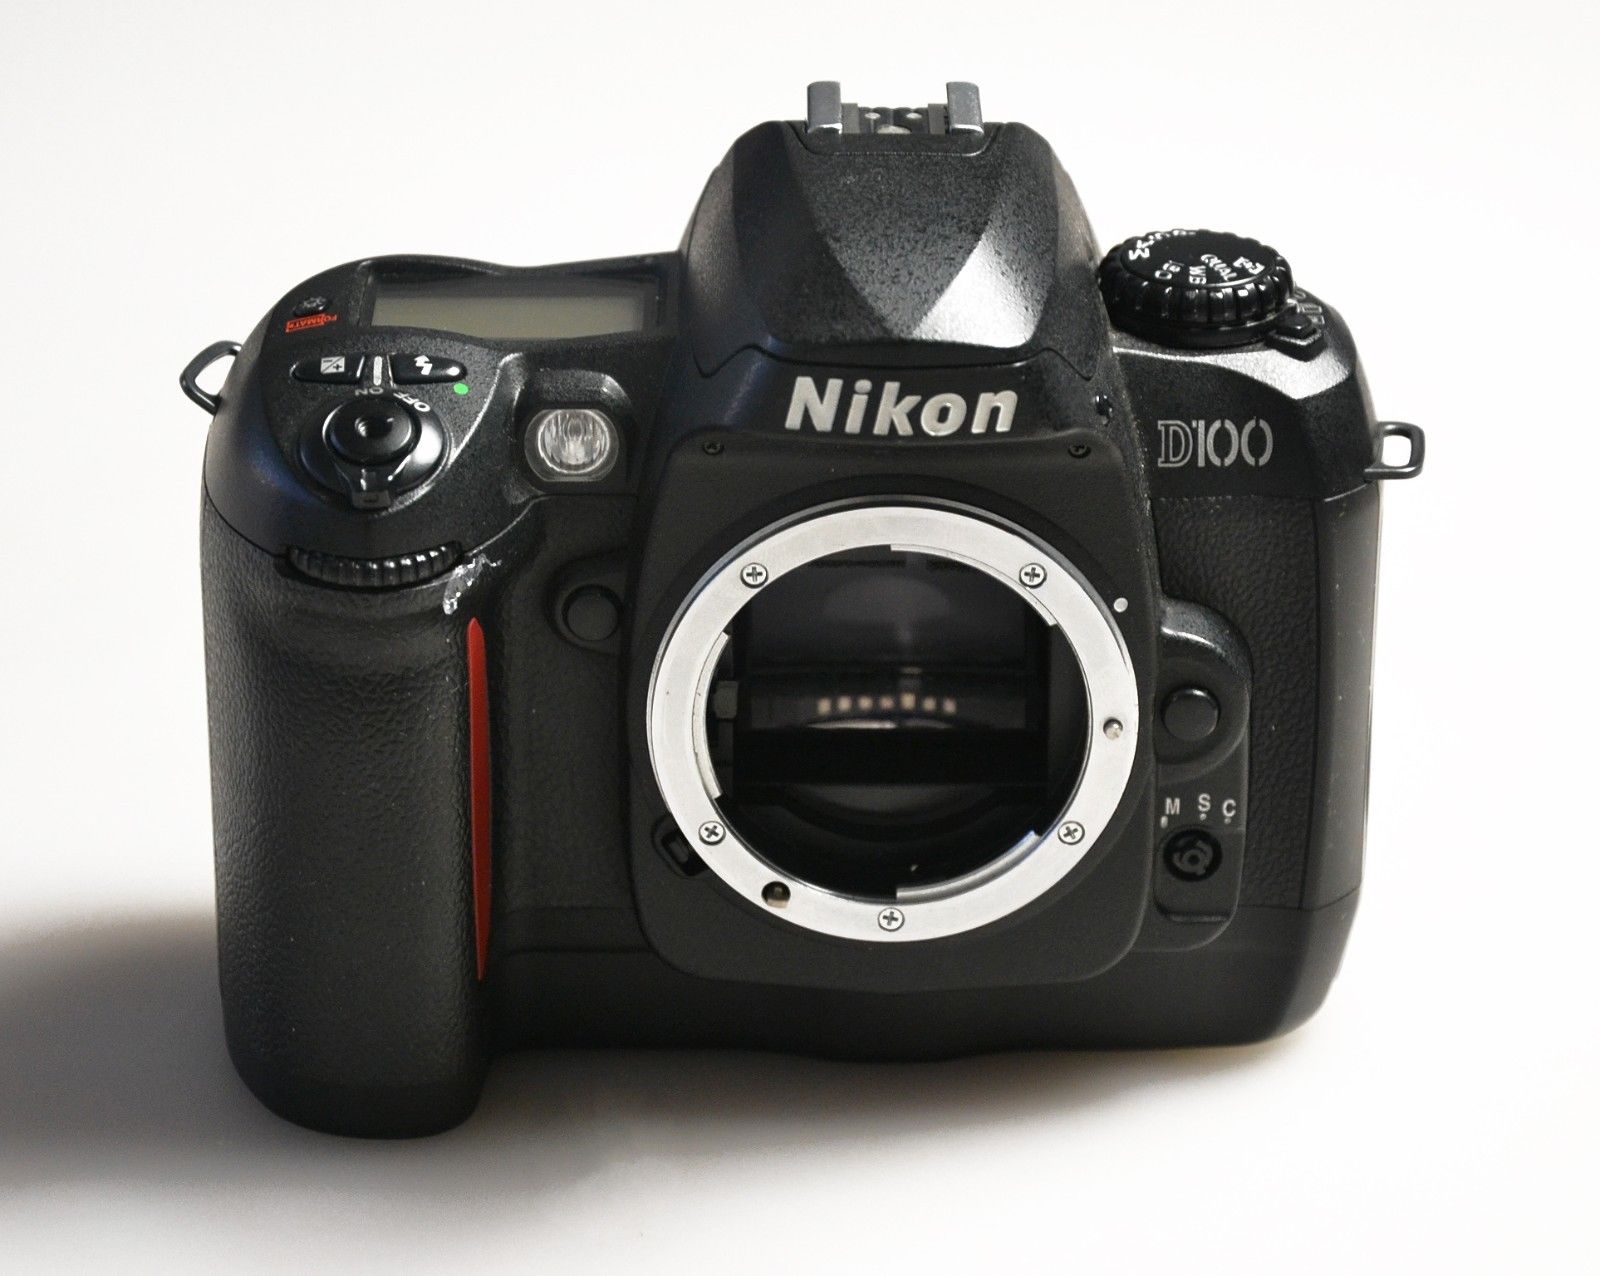  Nikon D100  6 1MP DSLR Camera Lenses and Cameras